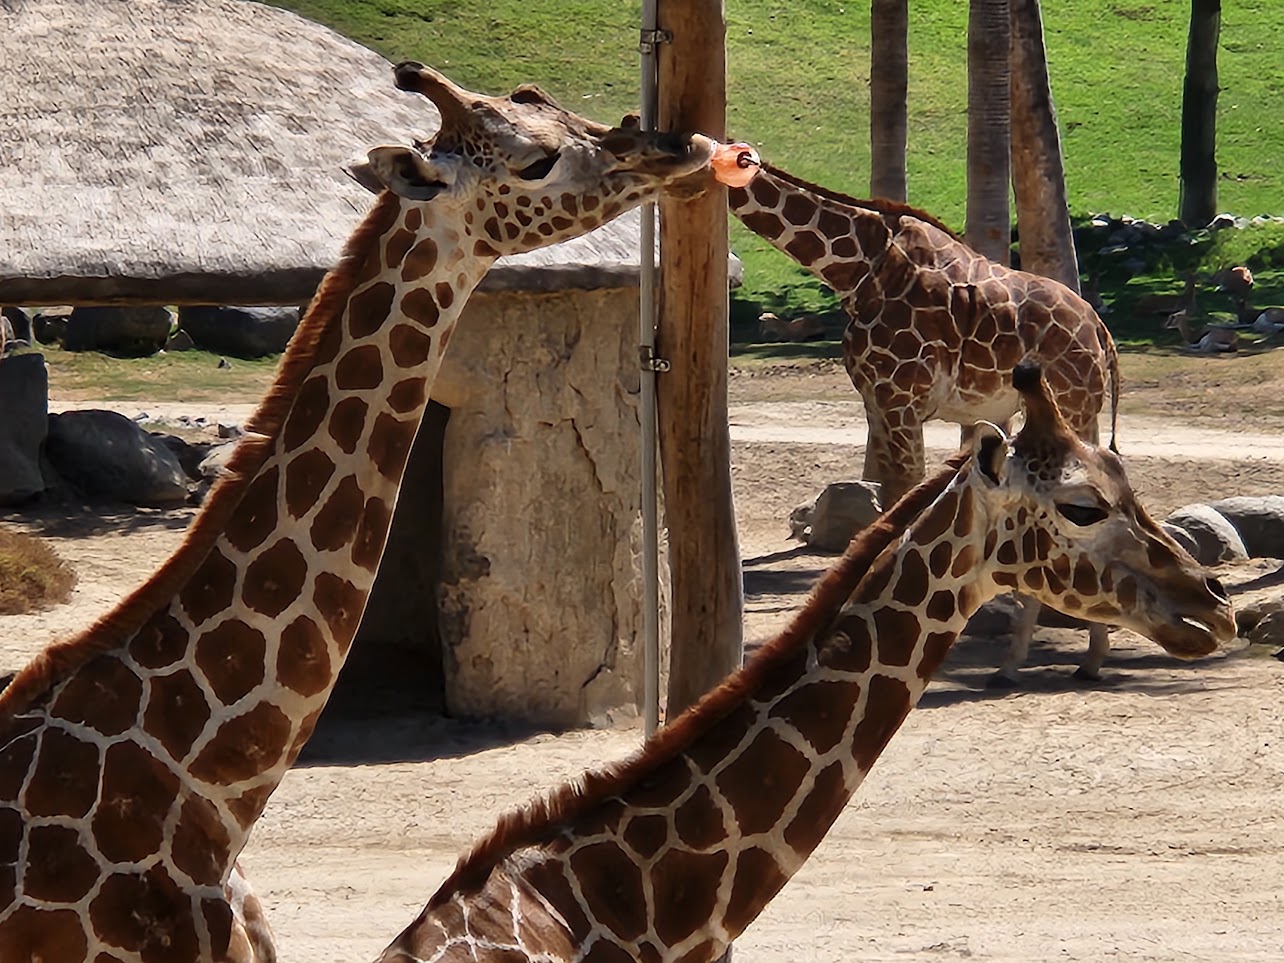 Two giraffes facing the same way